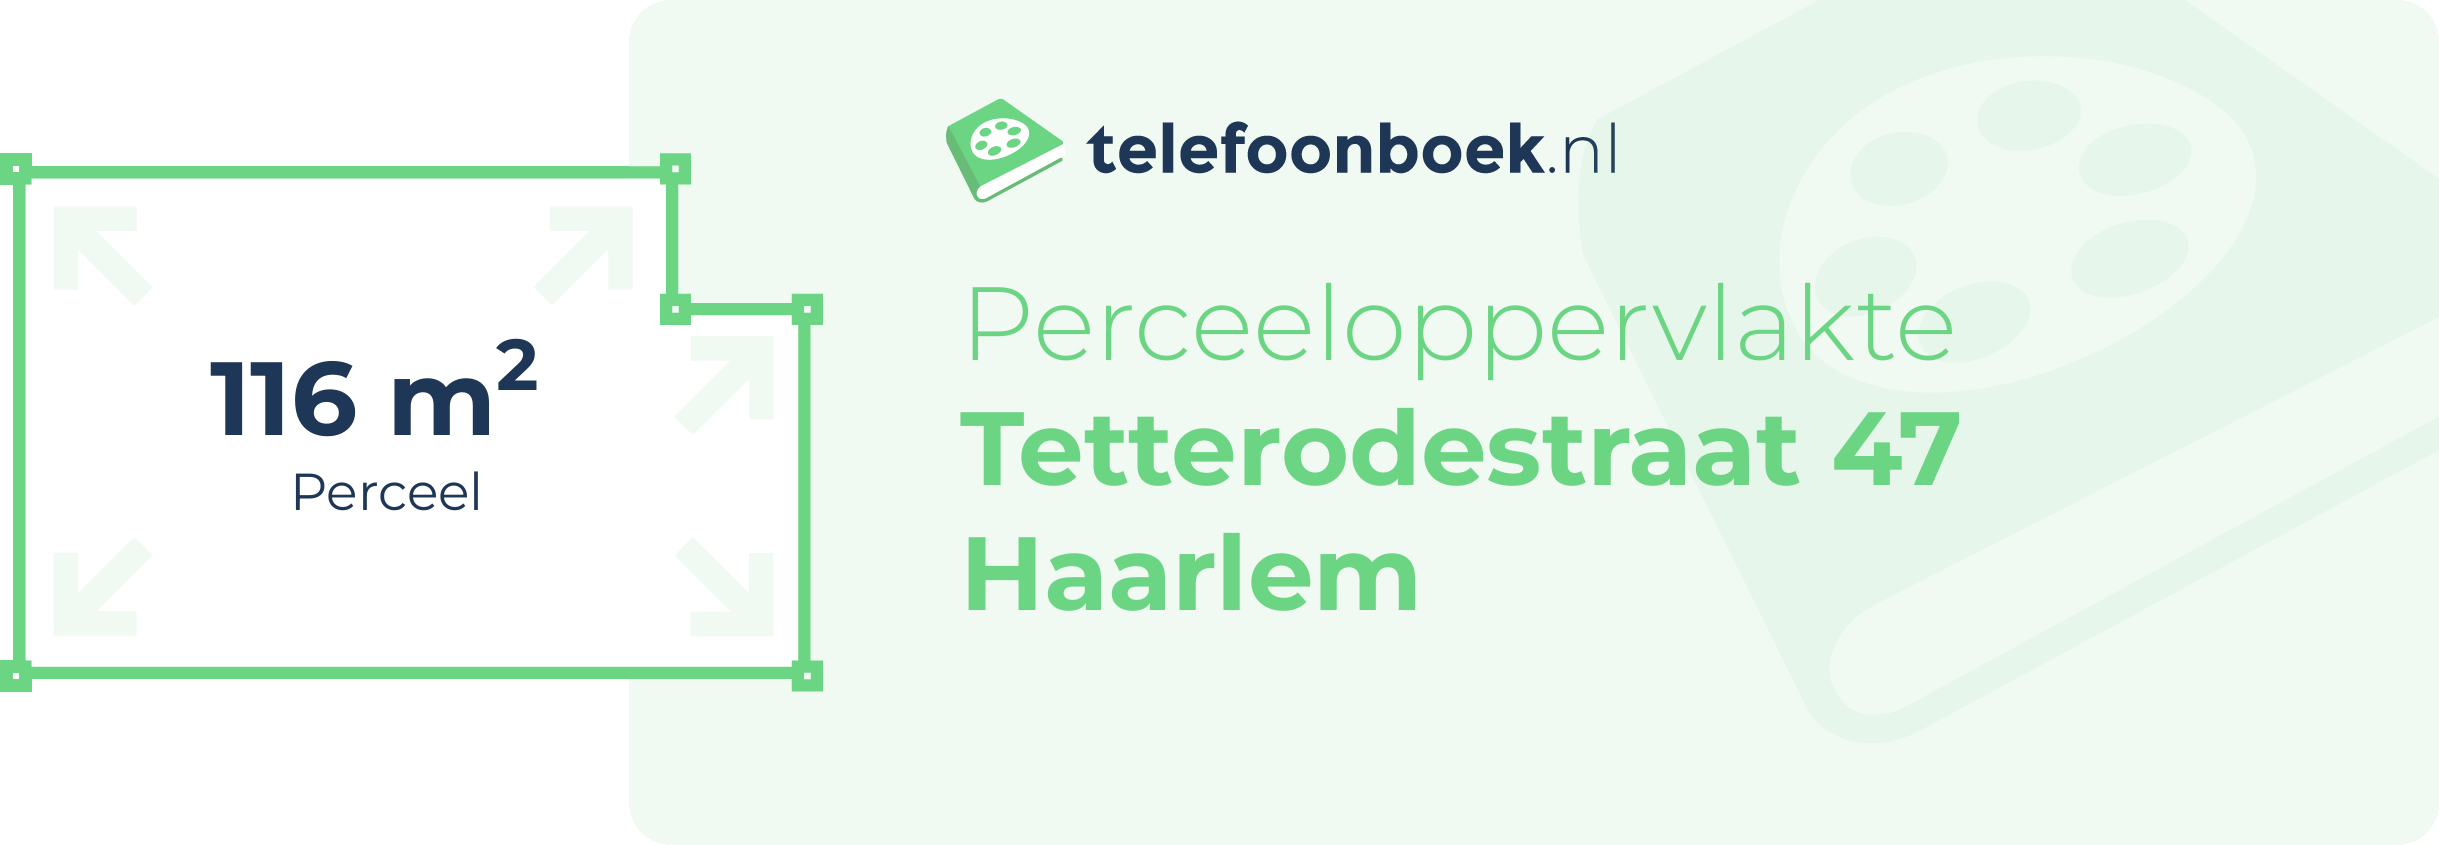 Perceeloppervlakte Tetterodestraat 47 Haarlem